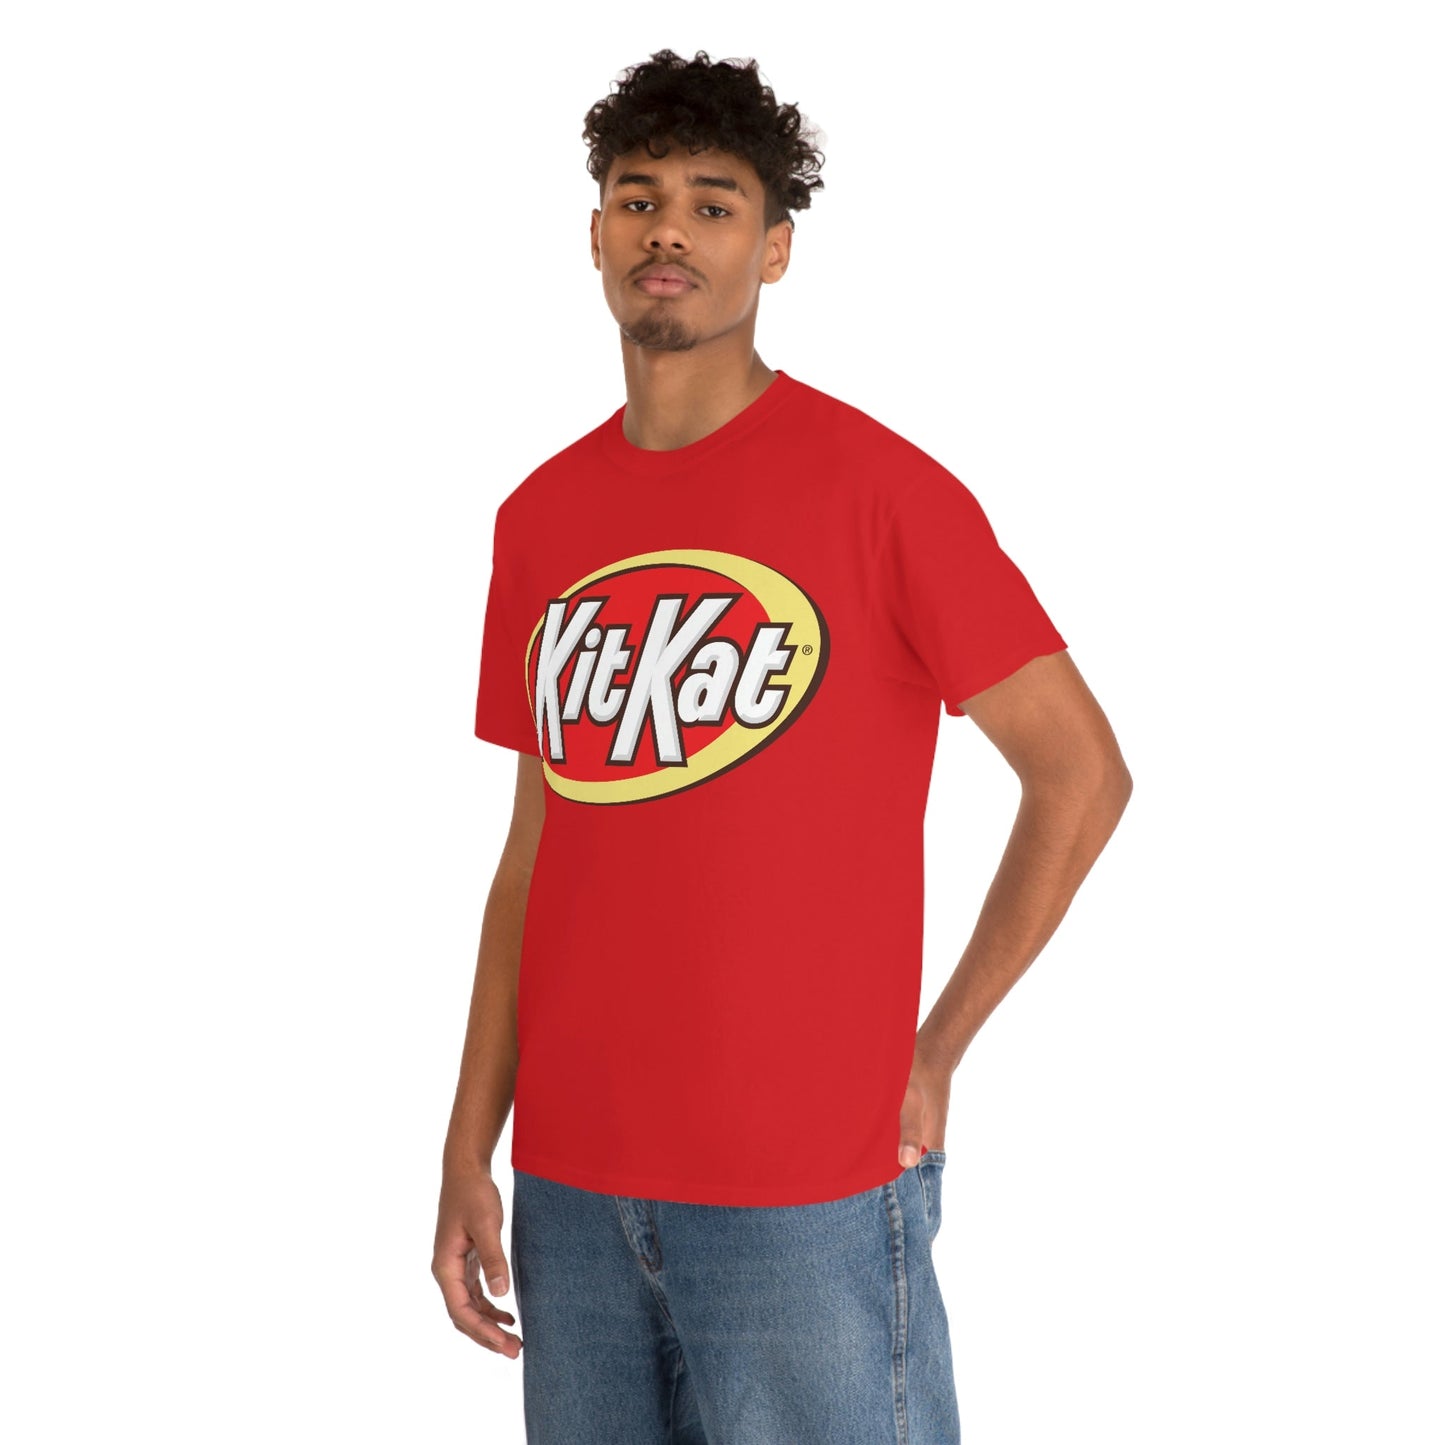 Kit Kat T-Shirt - RetroTeeShop